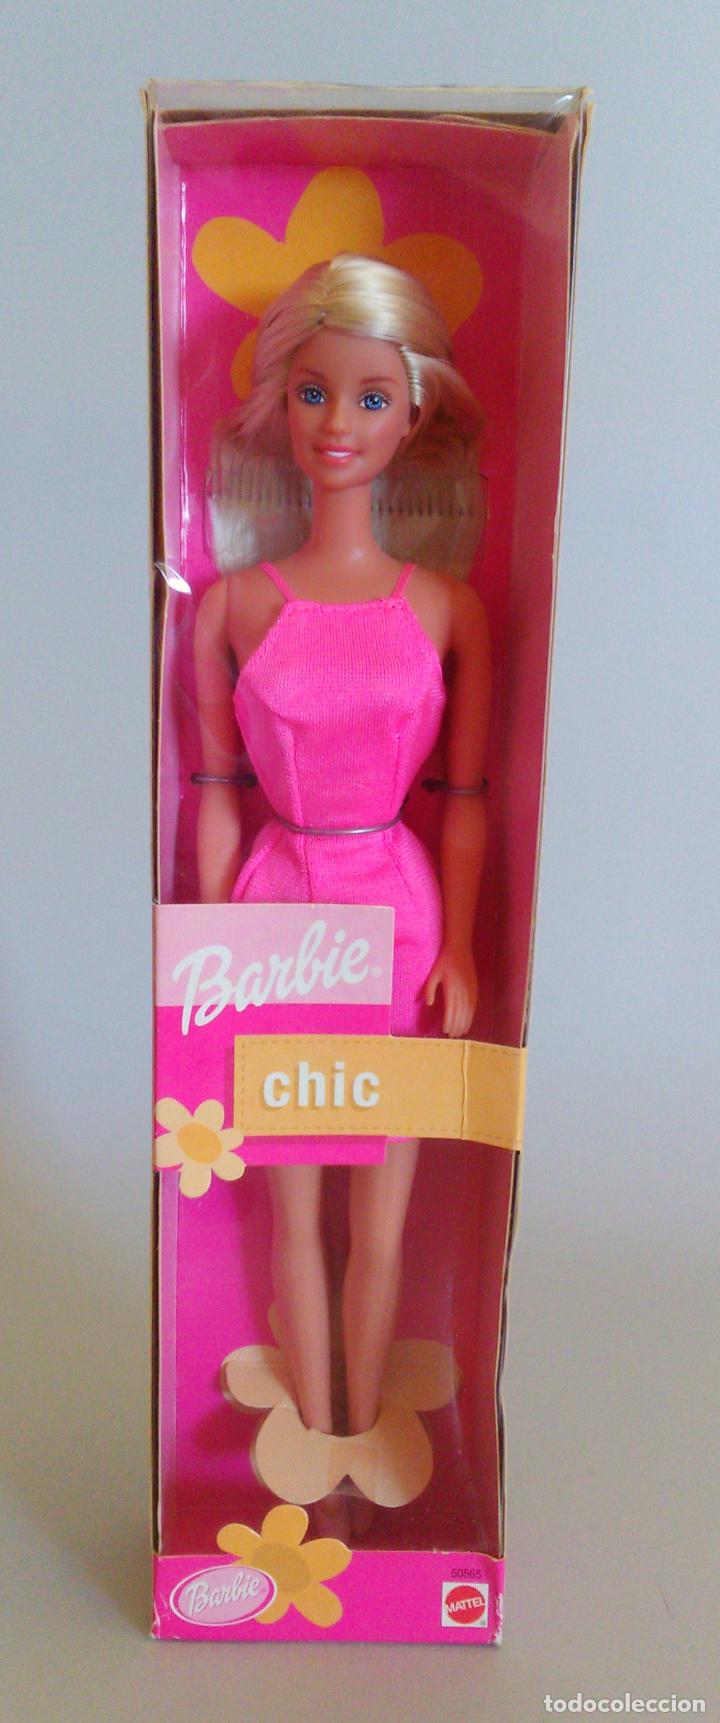 chic barbie